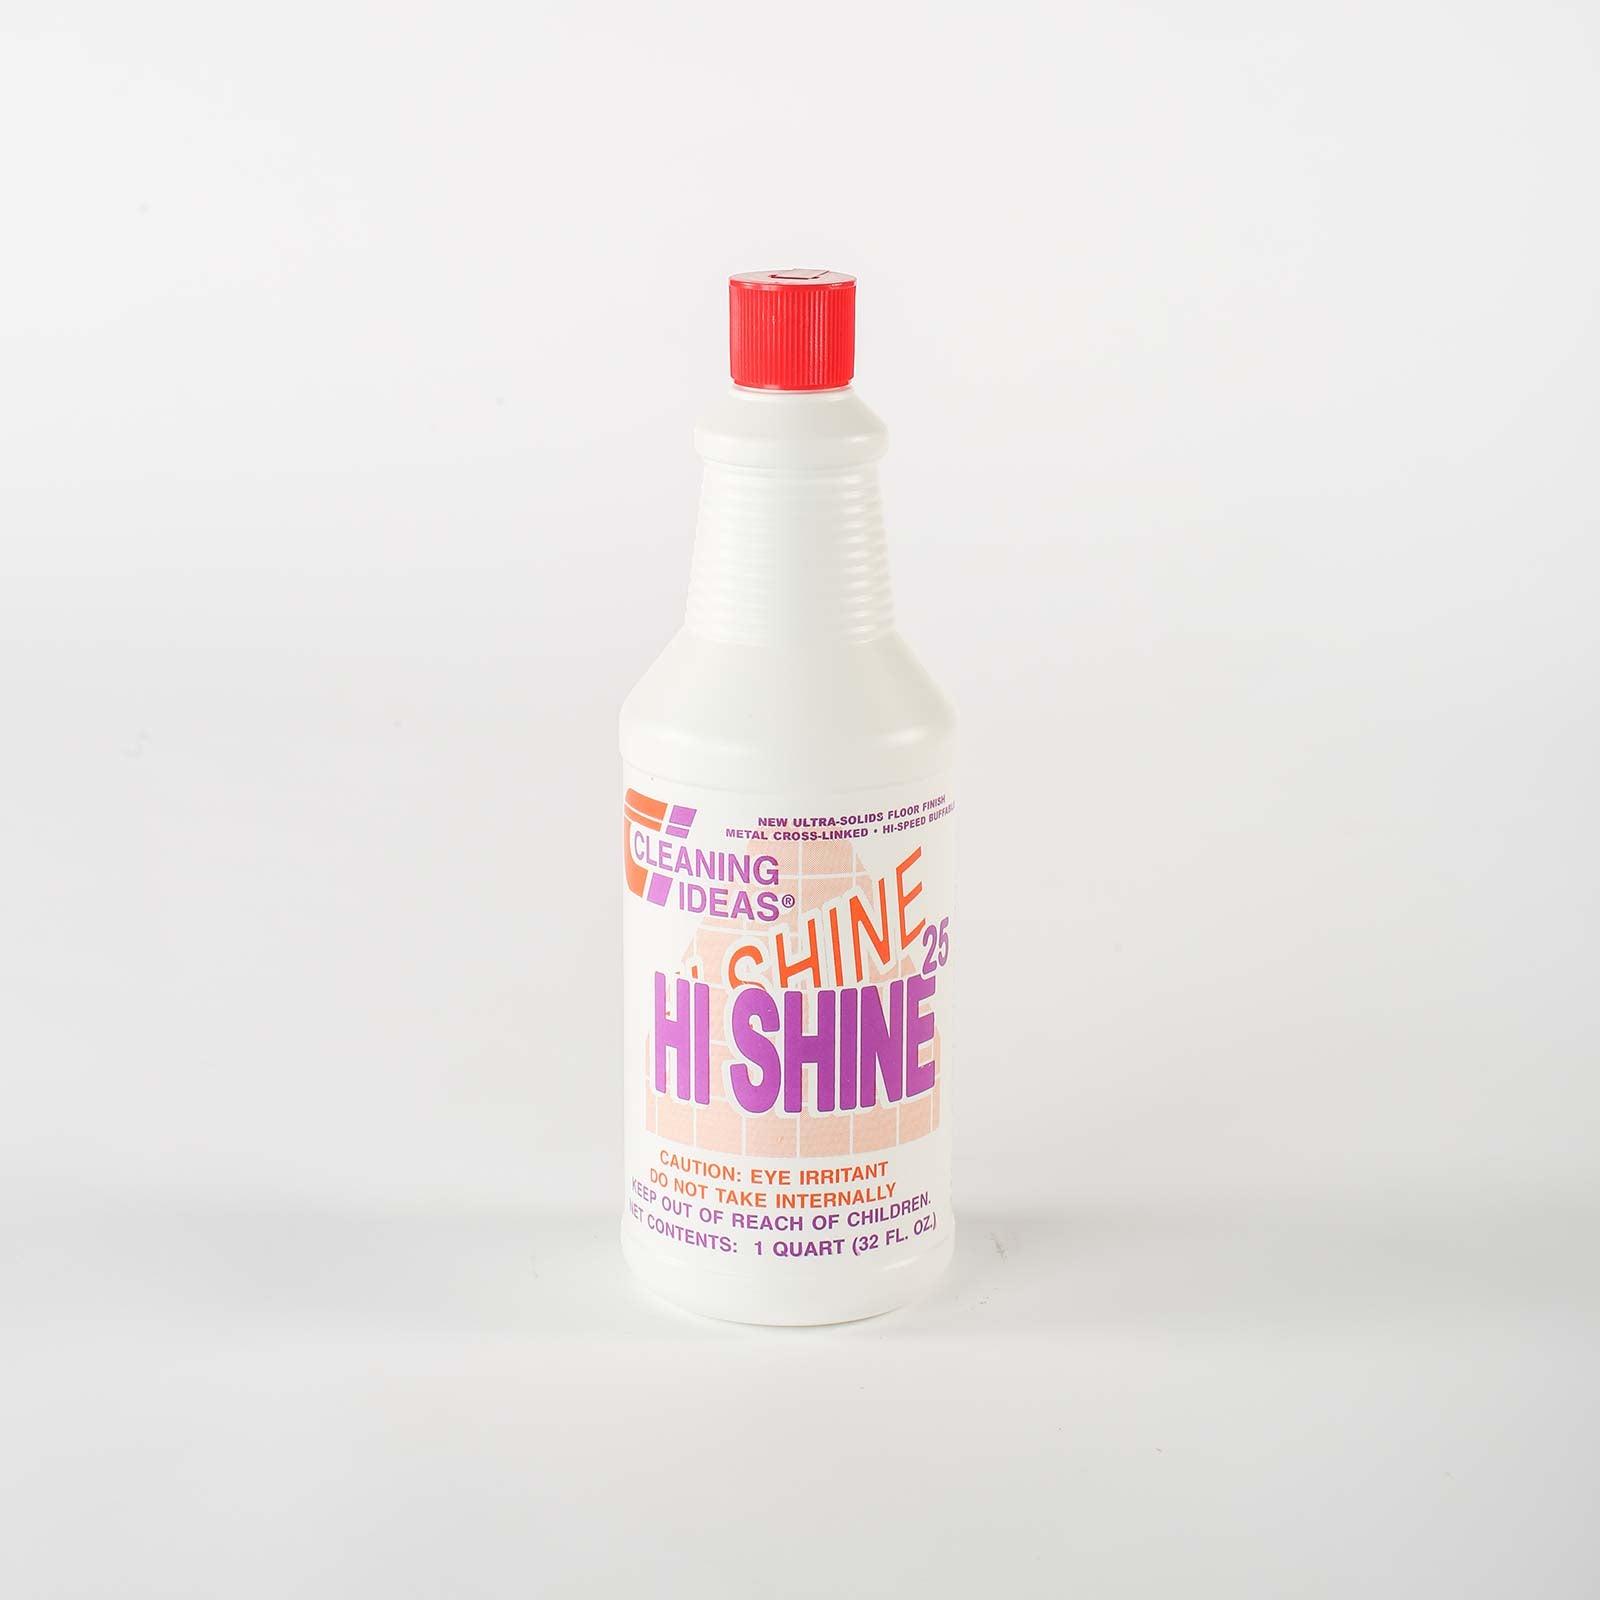 Hi-Shine 25 High Gloss - Cleaning Ideas 